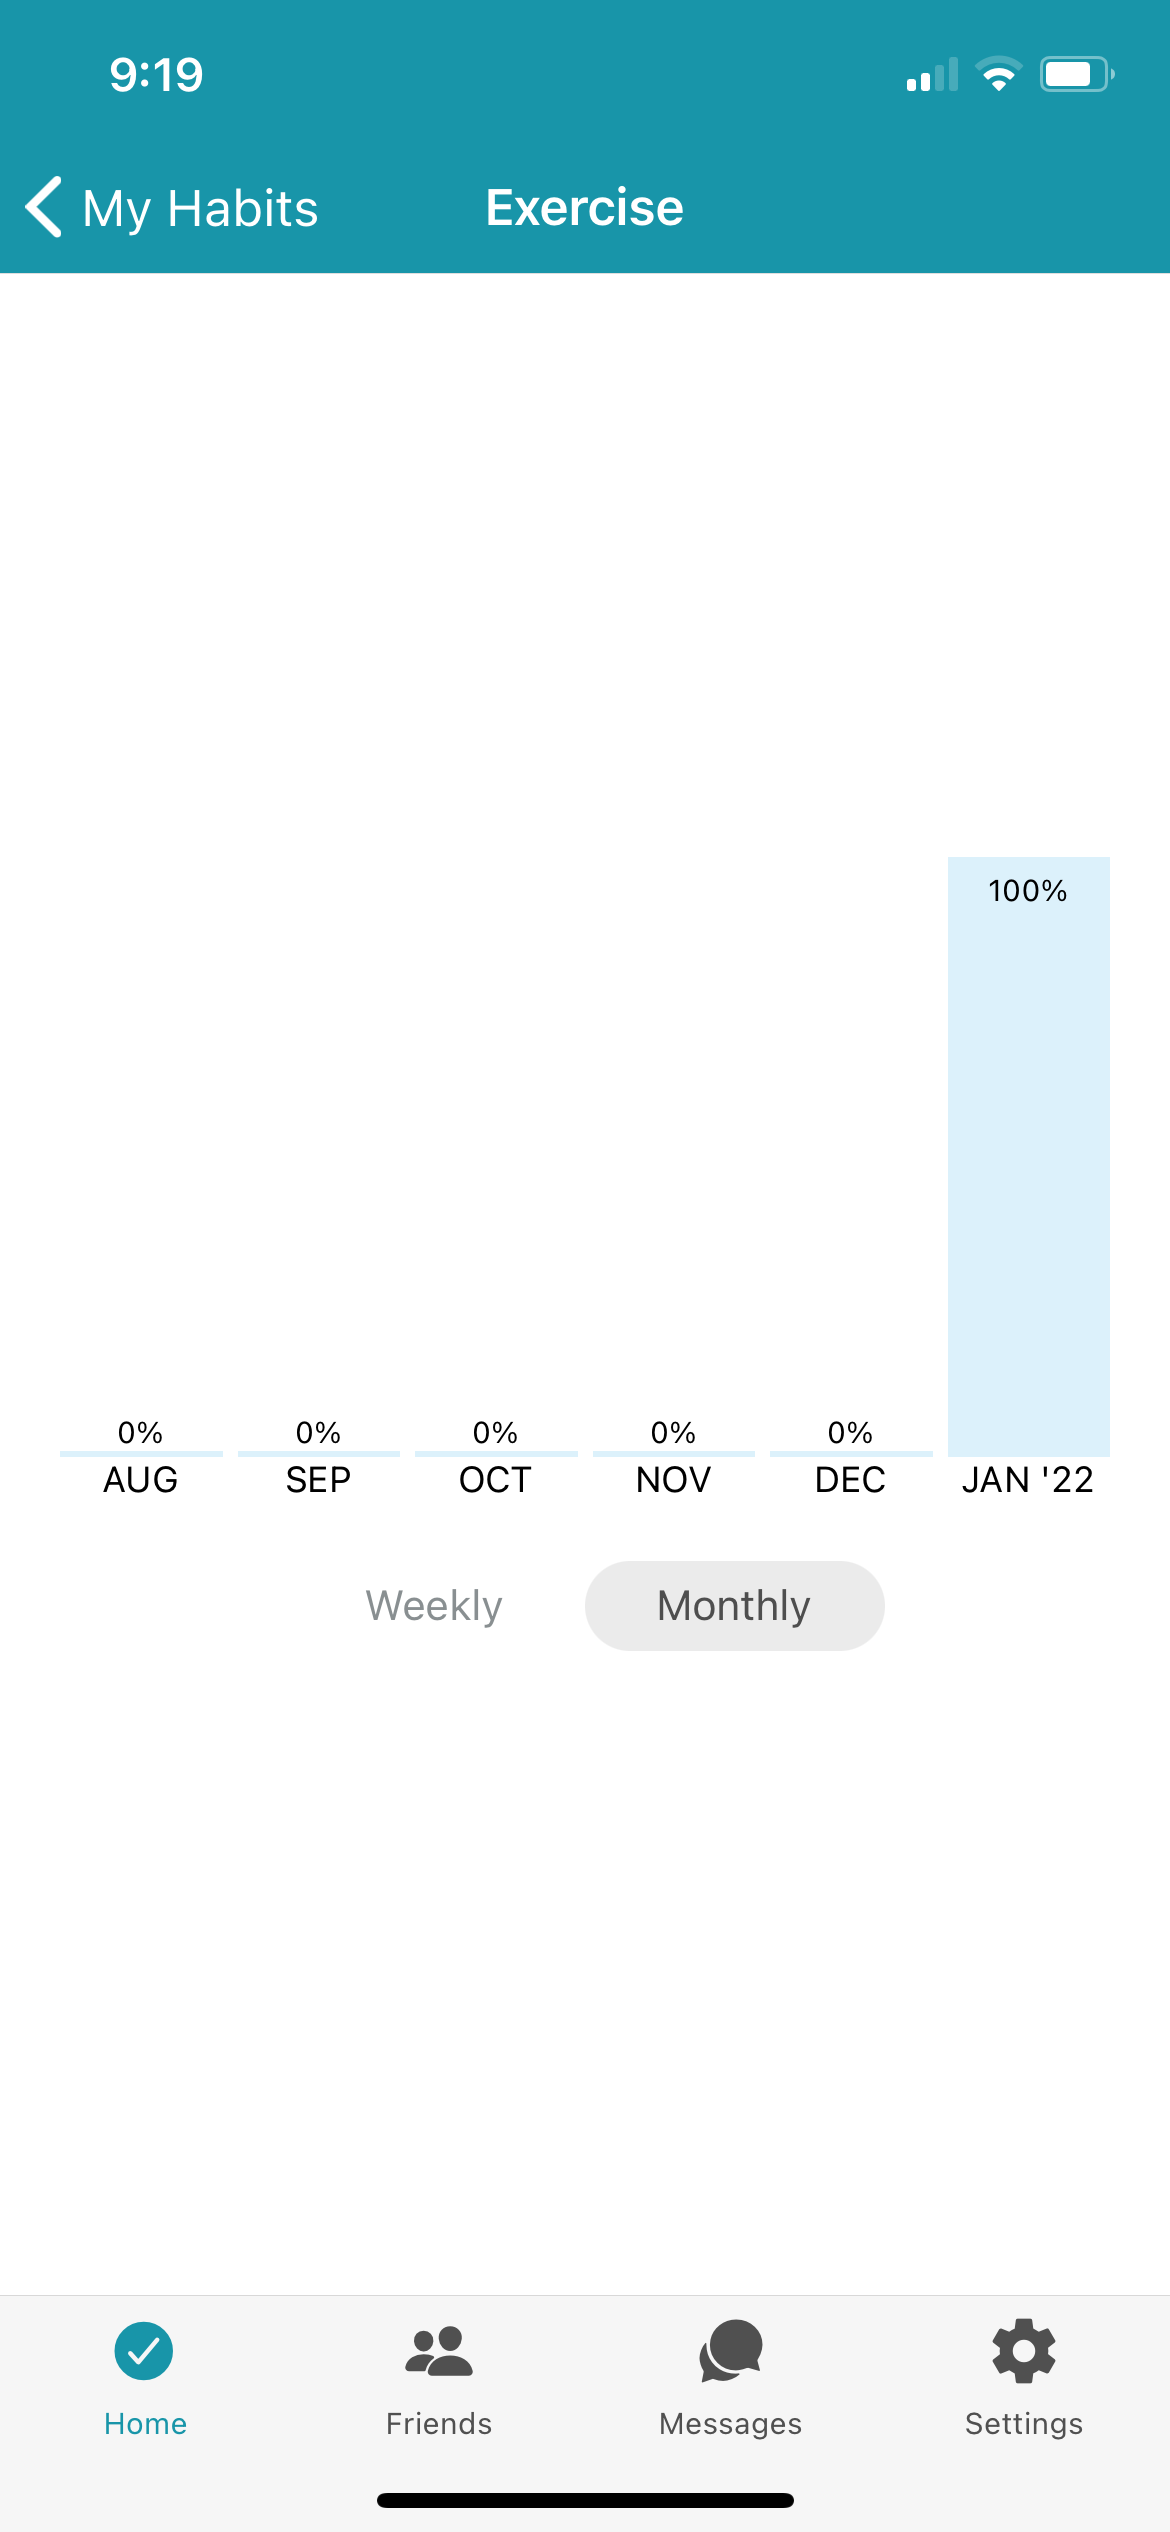 Monthly Chart View of Habit in HabitShare